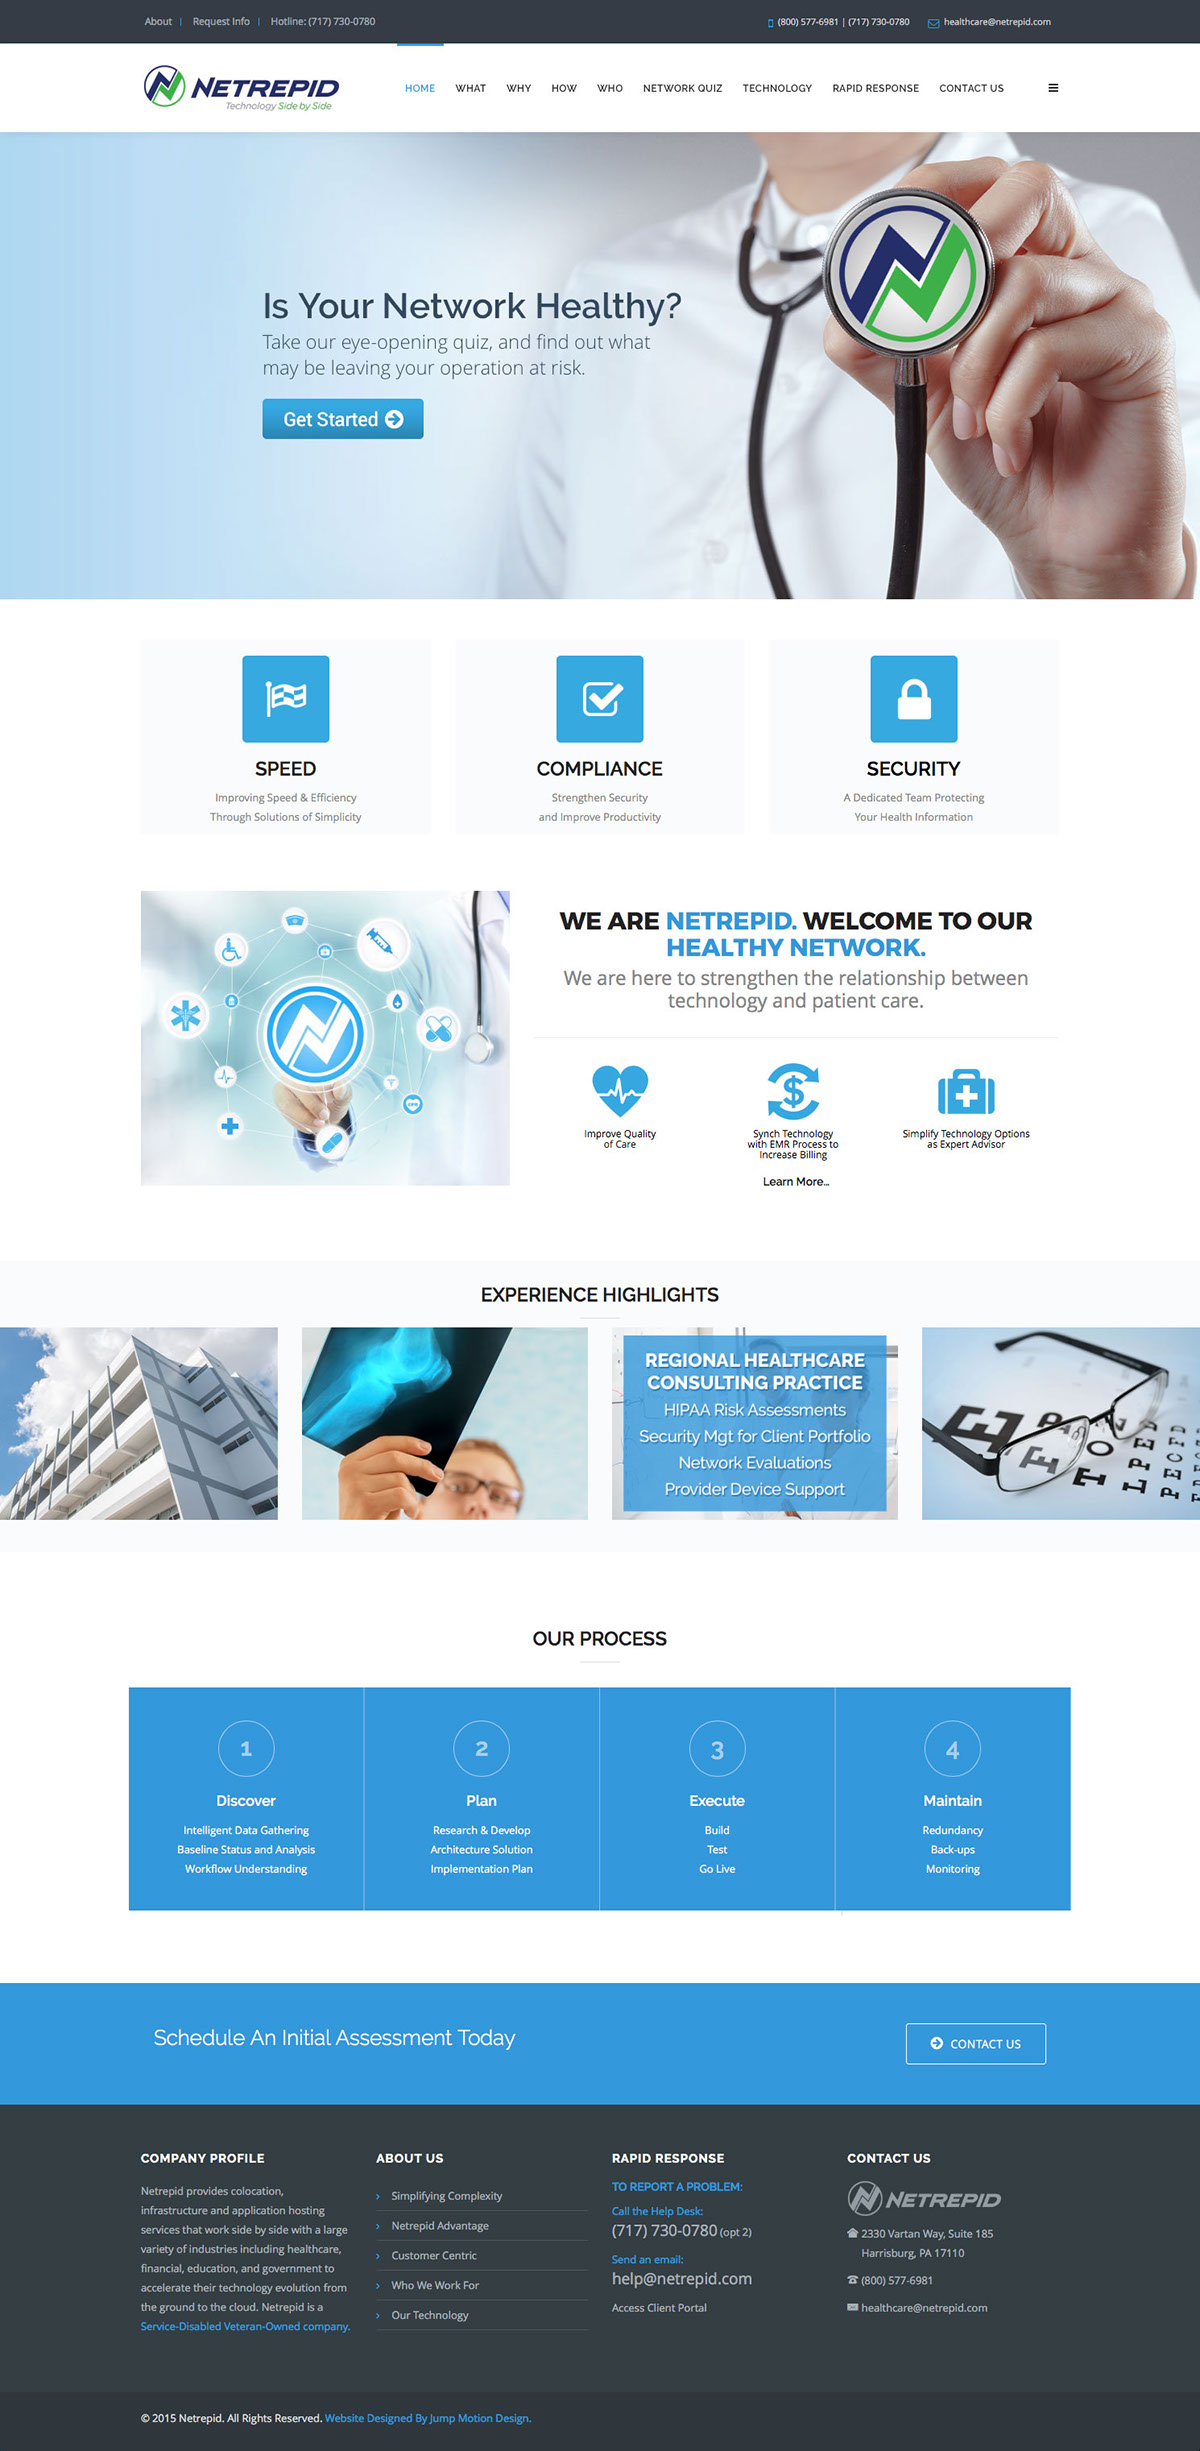 Joomla CMS cms Responsive Design healthcare technology